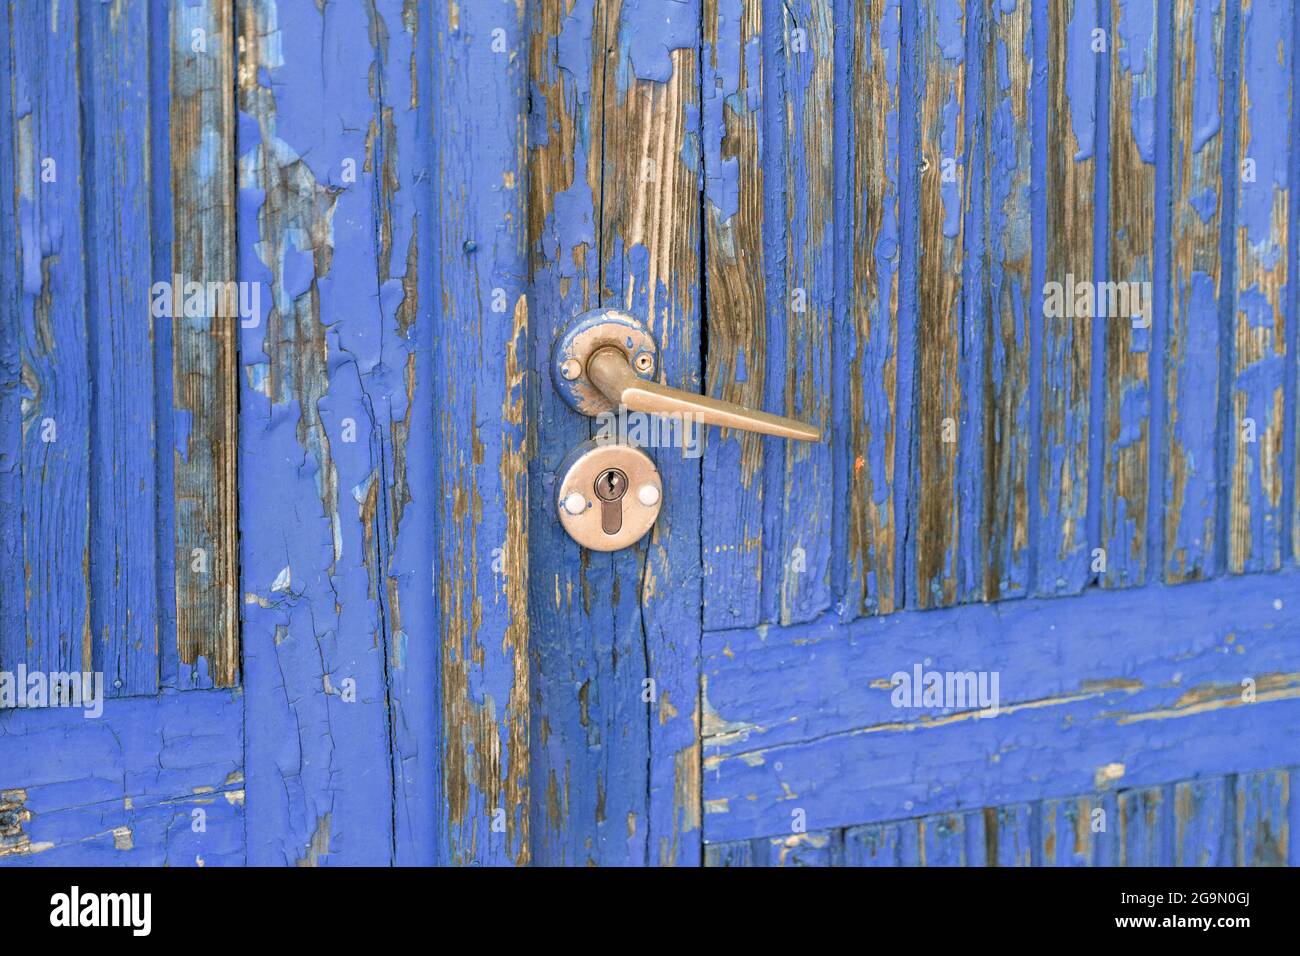 Old wooden door with blue paint peeling off Stock Photo